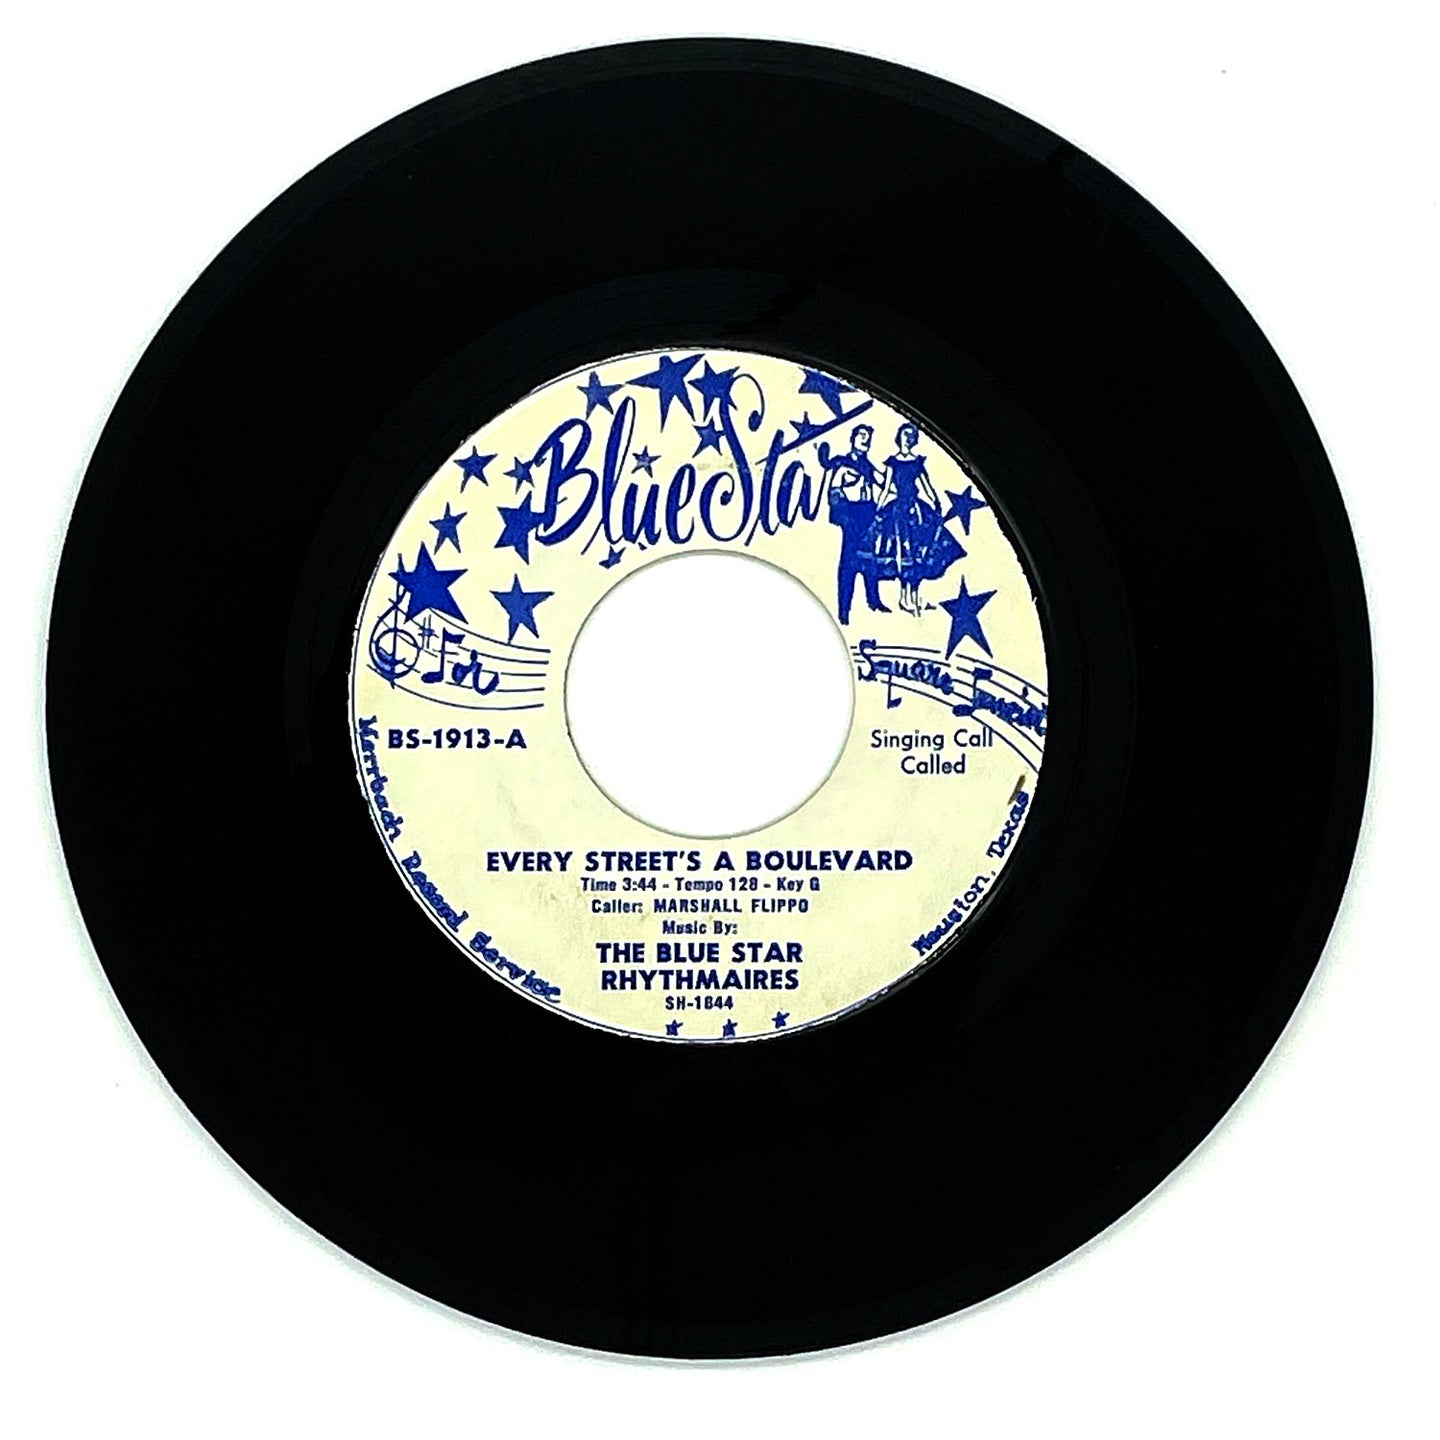 Blue Star Rhythmaires, The feat. Marshall Flippo : EVERY STREET'S A BOULEVARD/ EVERY STREET'S A BOULEVARD (INSTRUMENTAL)